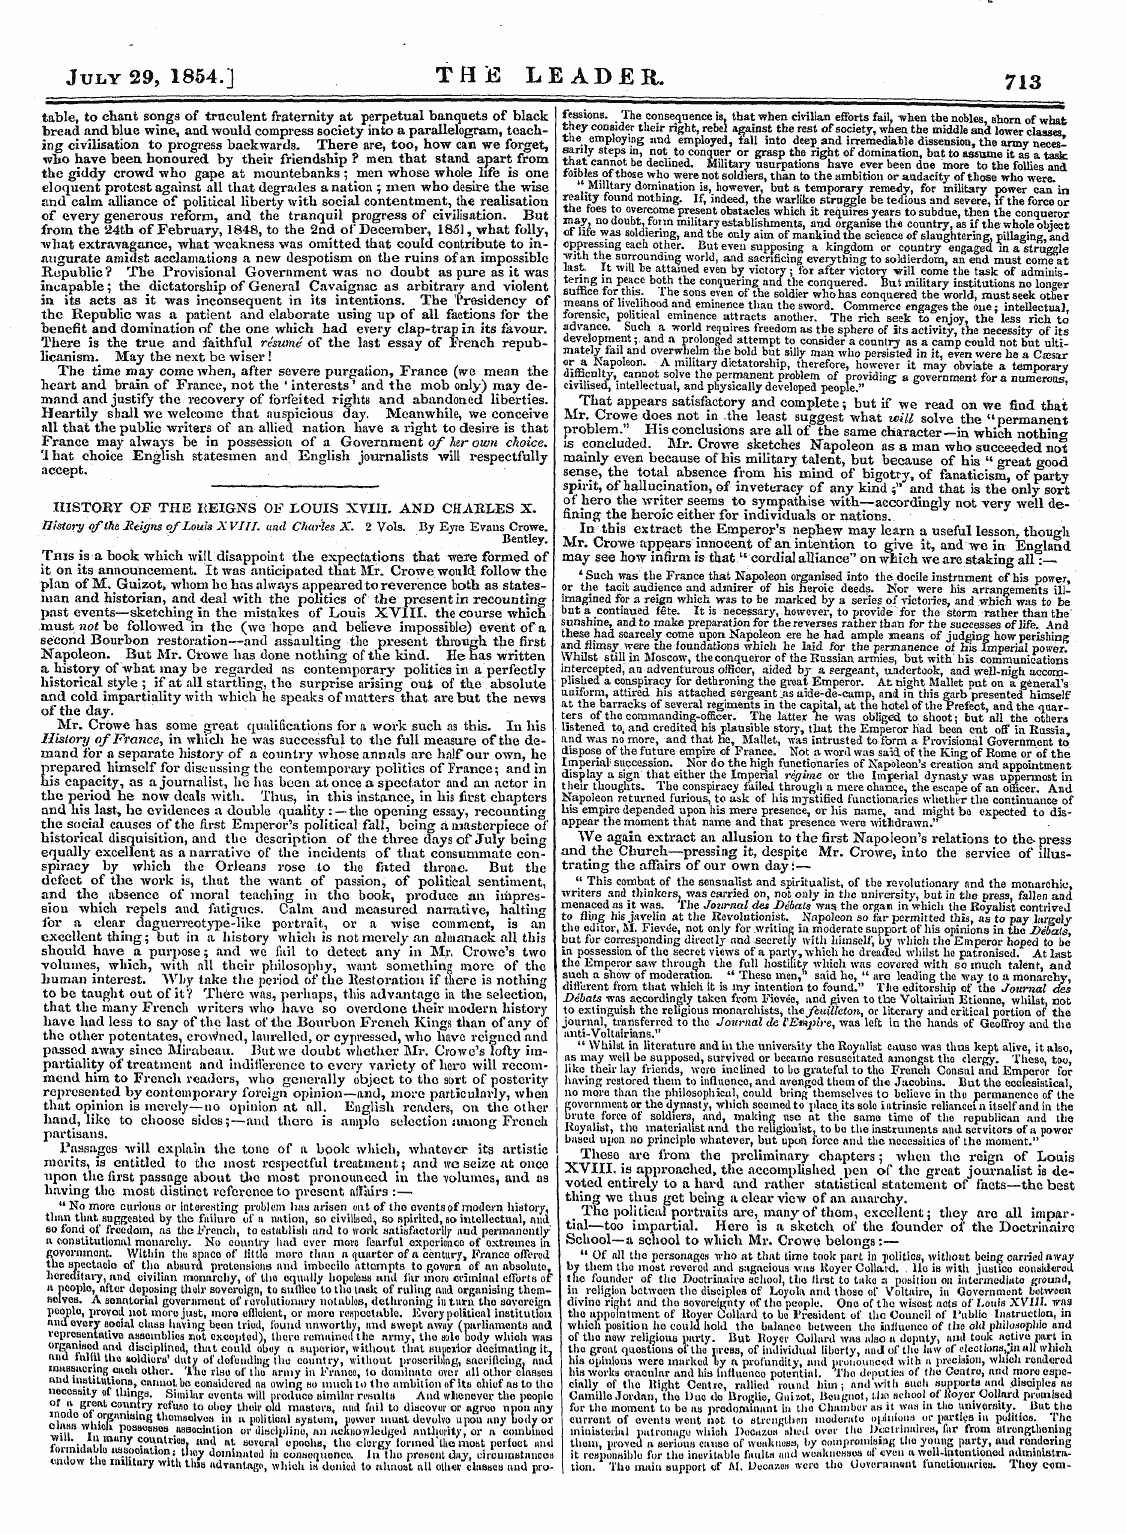 Leader (1850-1860): jS F Y, 2nd edition - July 29, 1854.] The Leader. 713